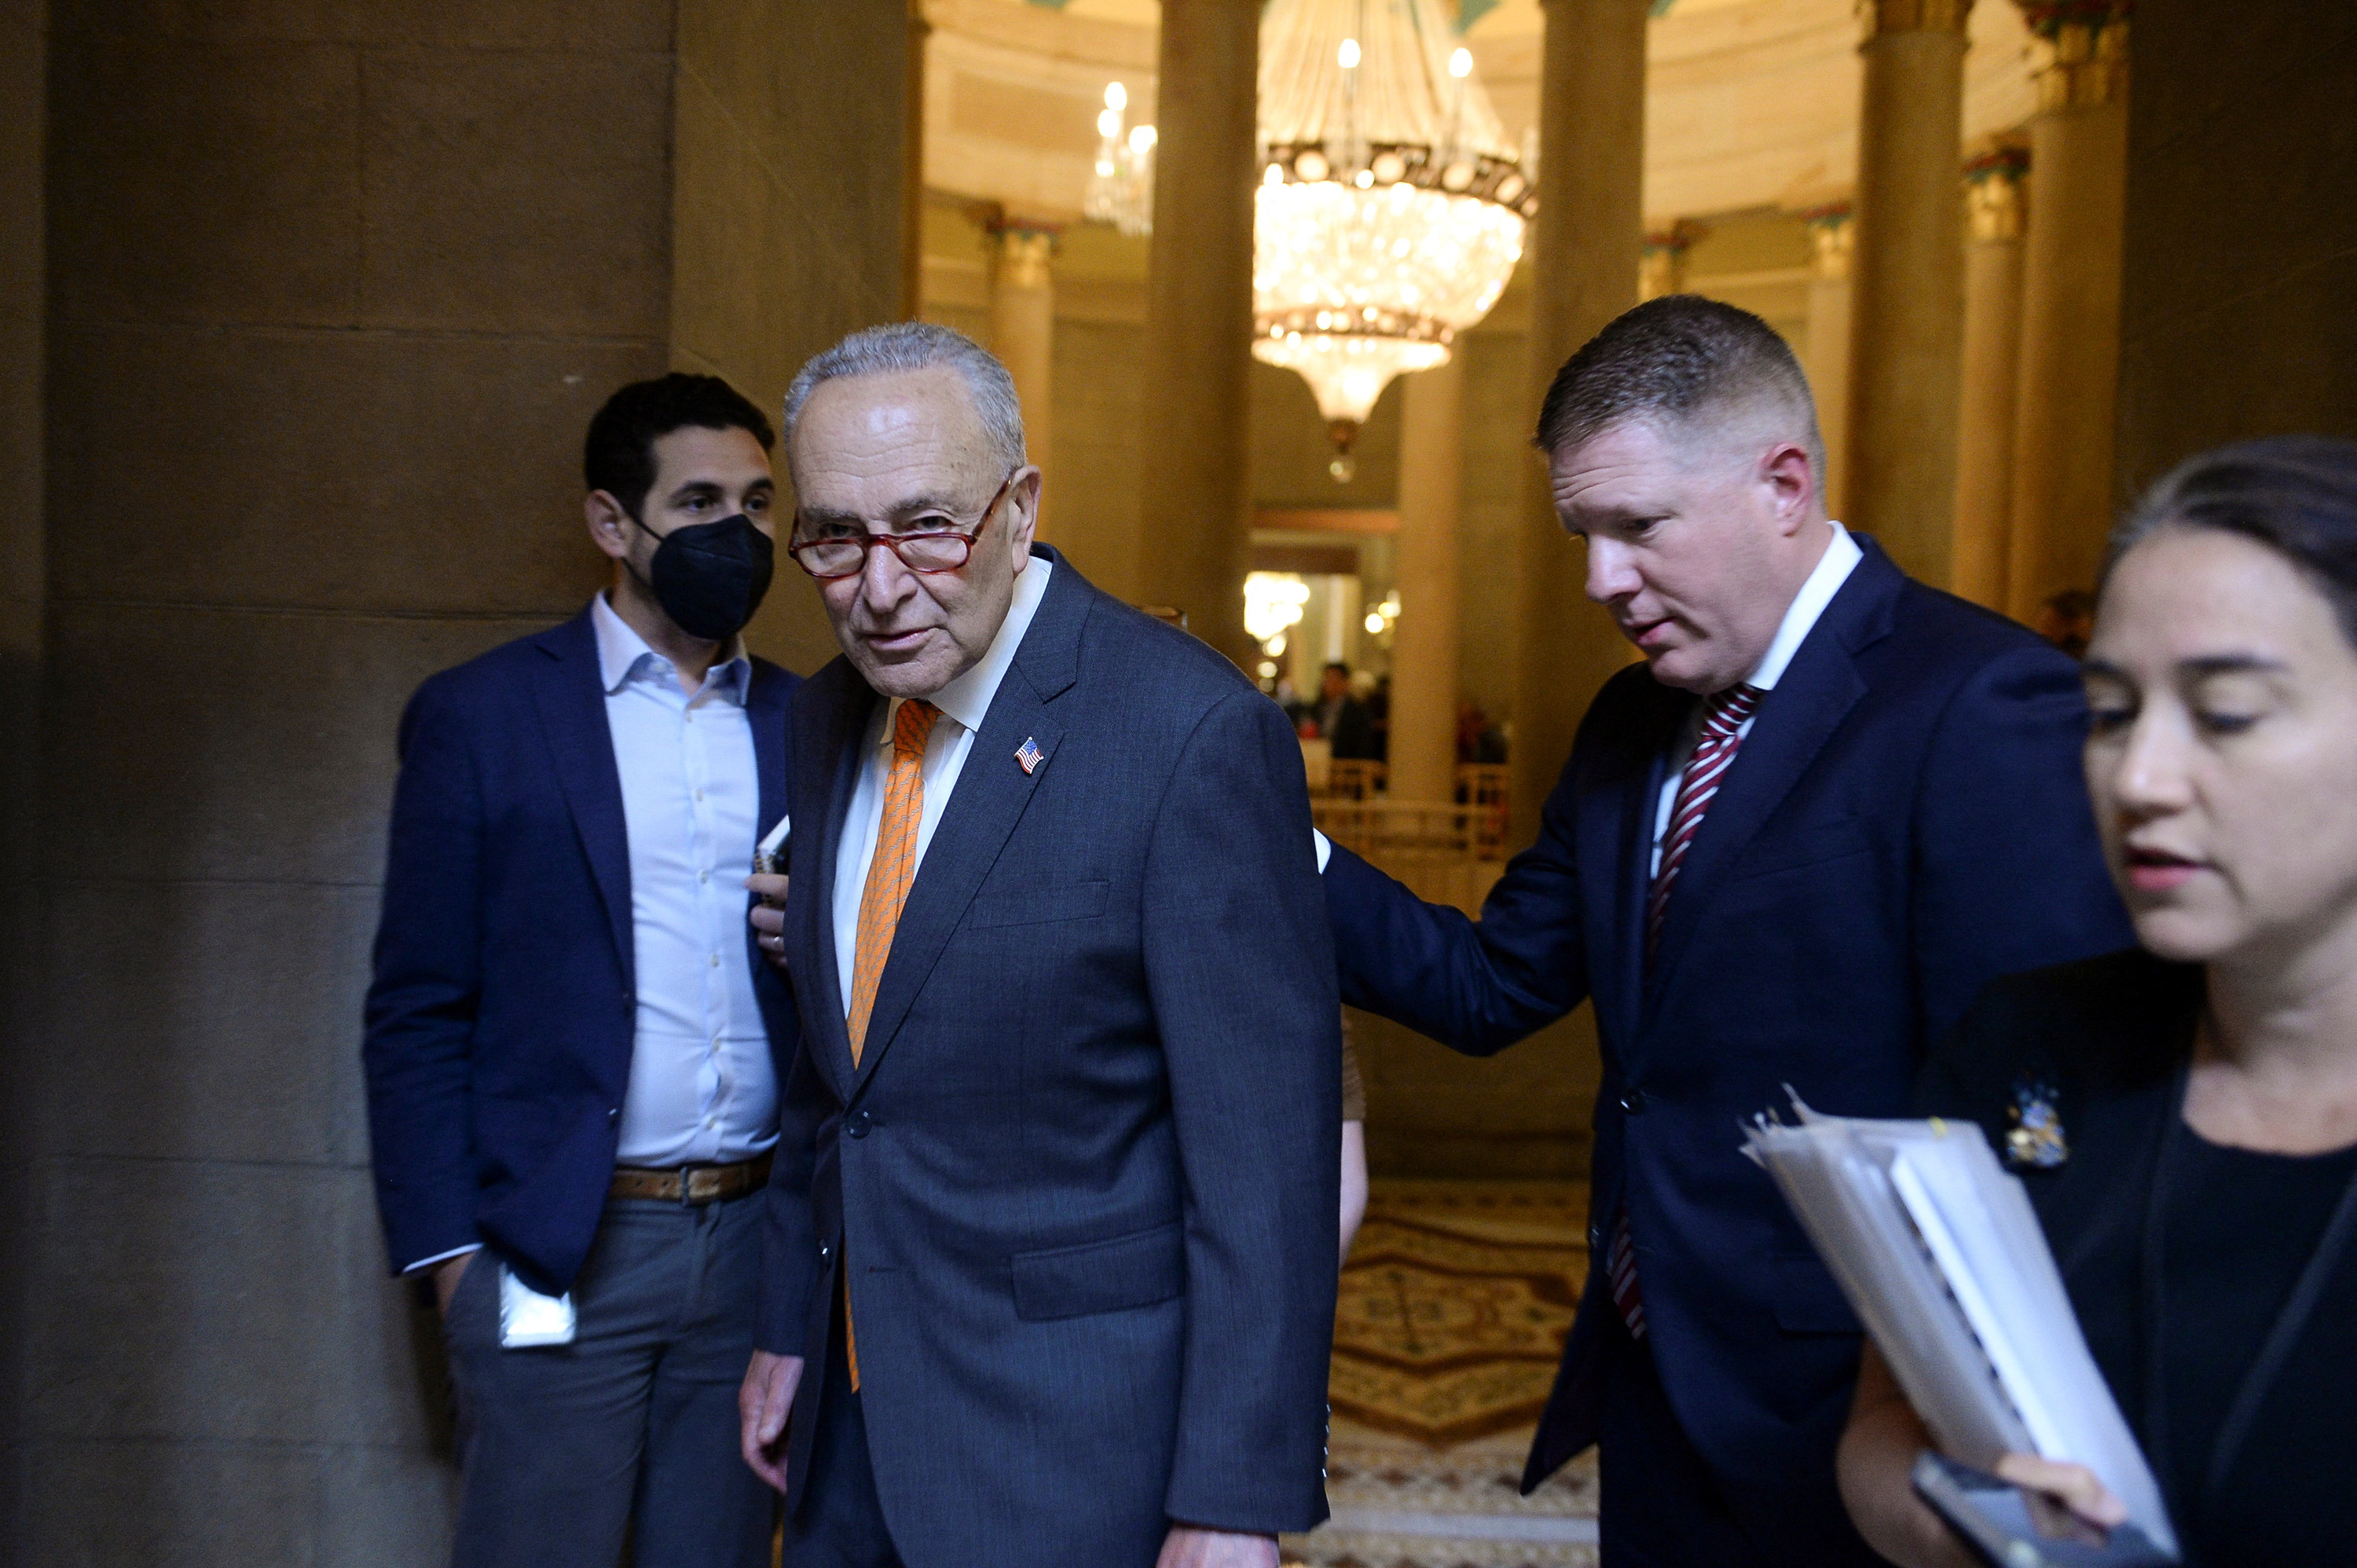 Senate Majority Leader Chuck Schumer (D-NY) walks with staff at the U.S. Capitol